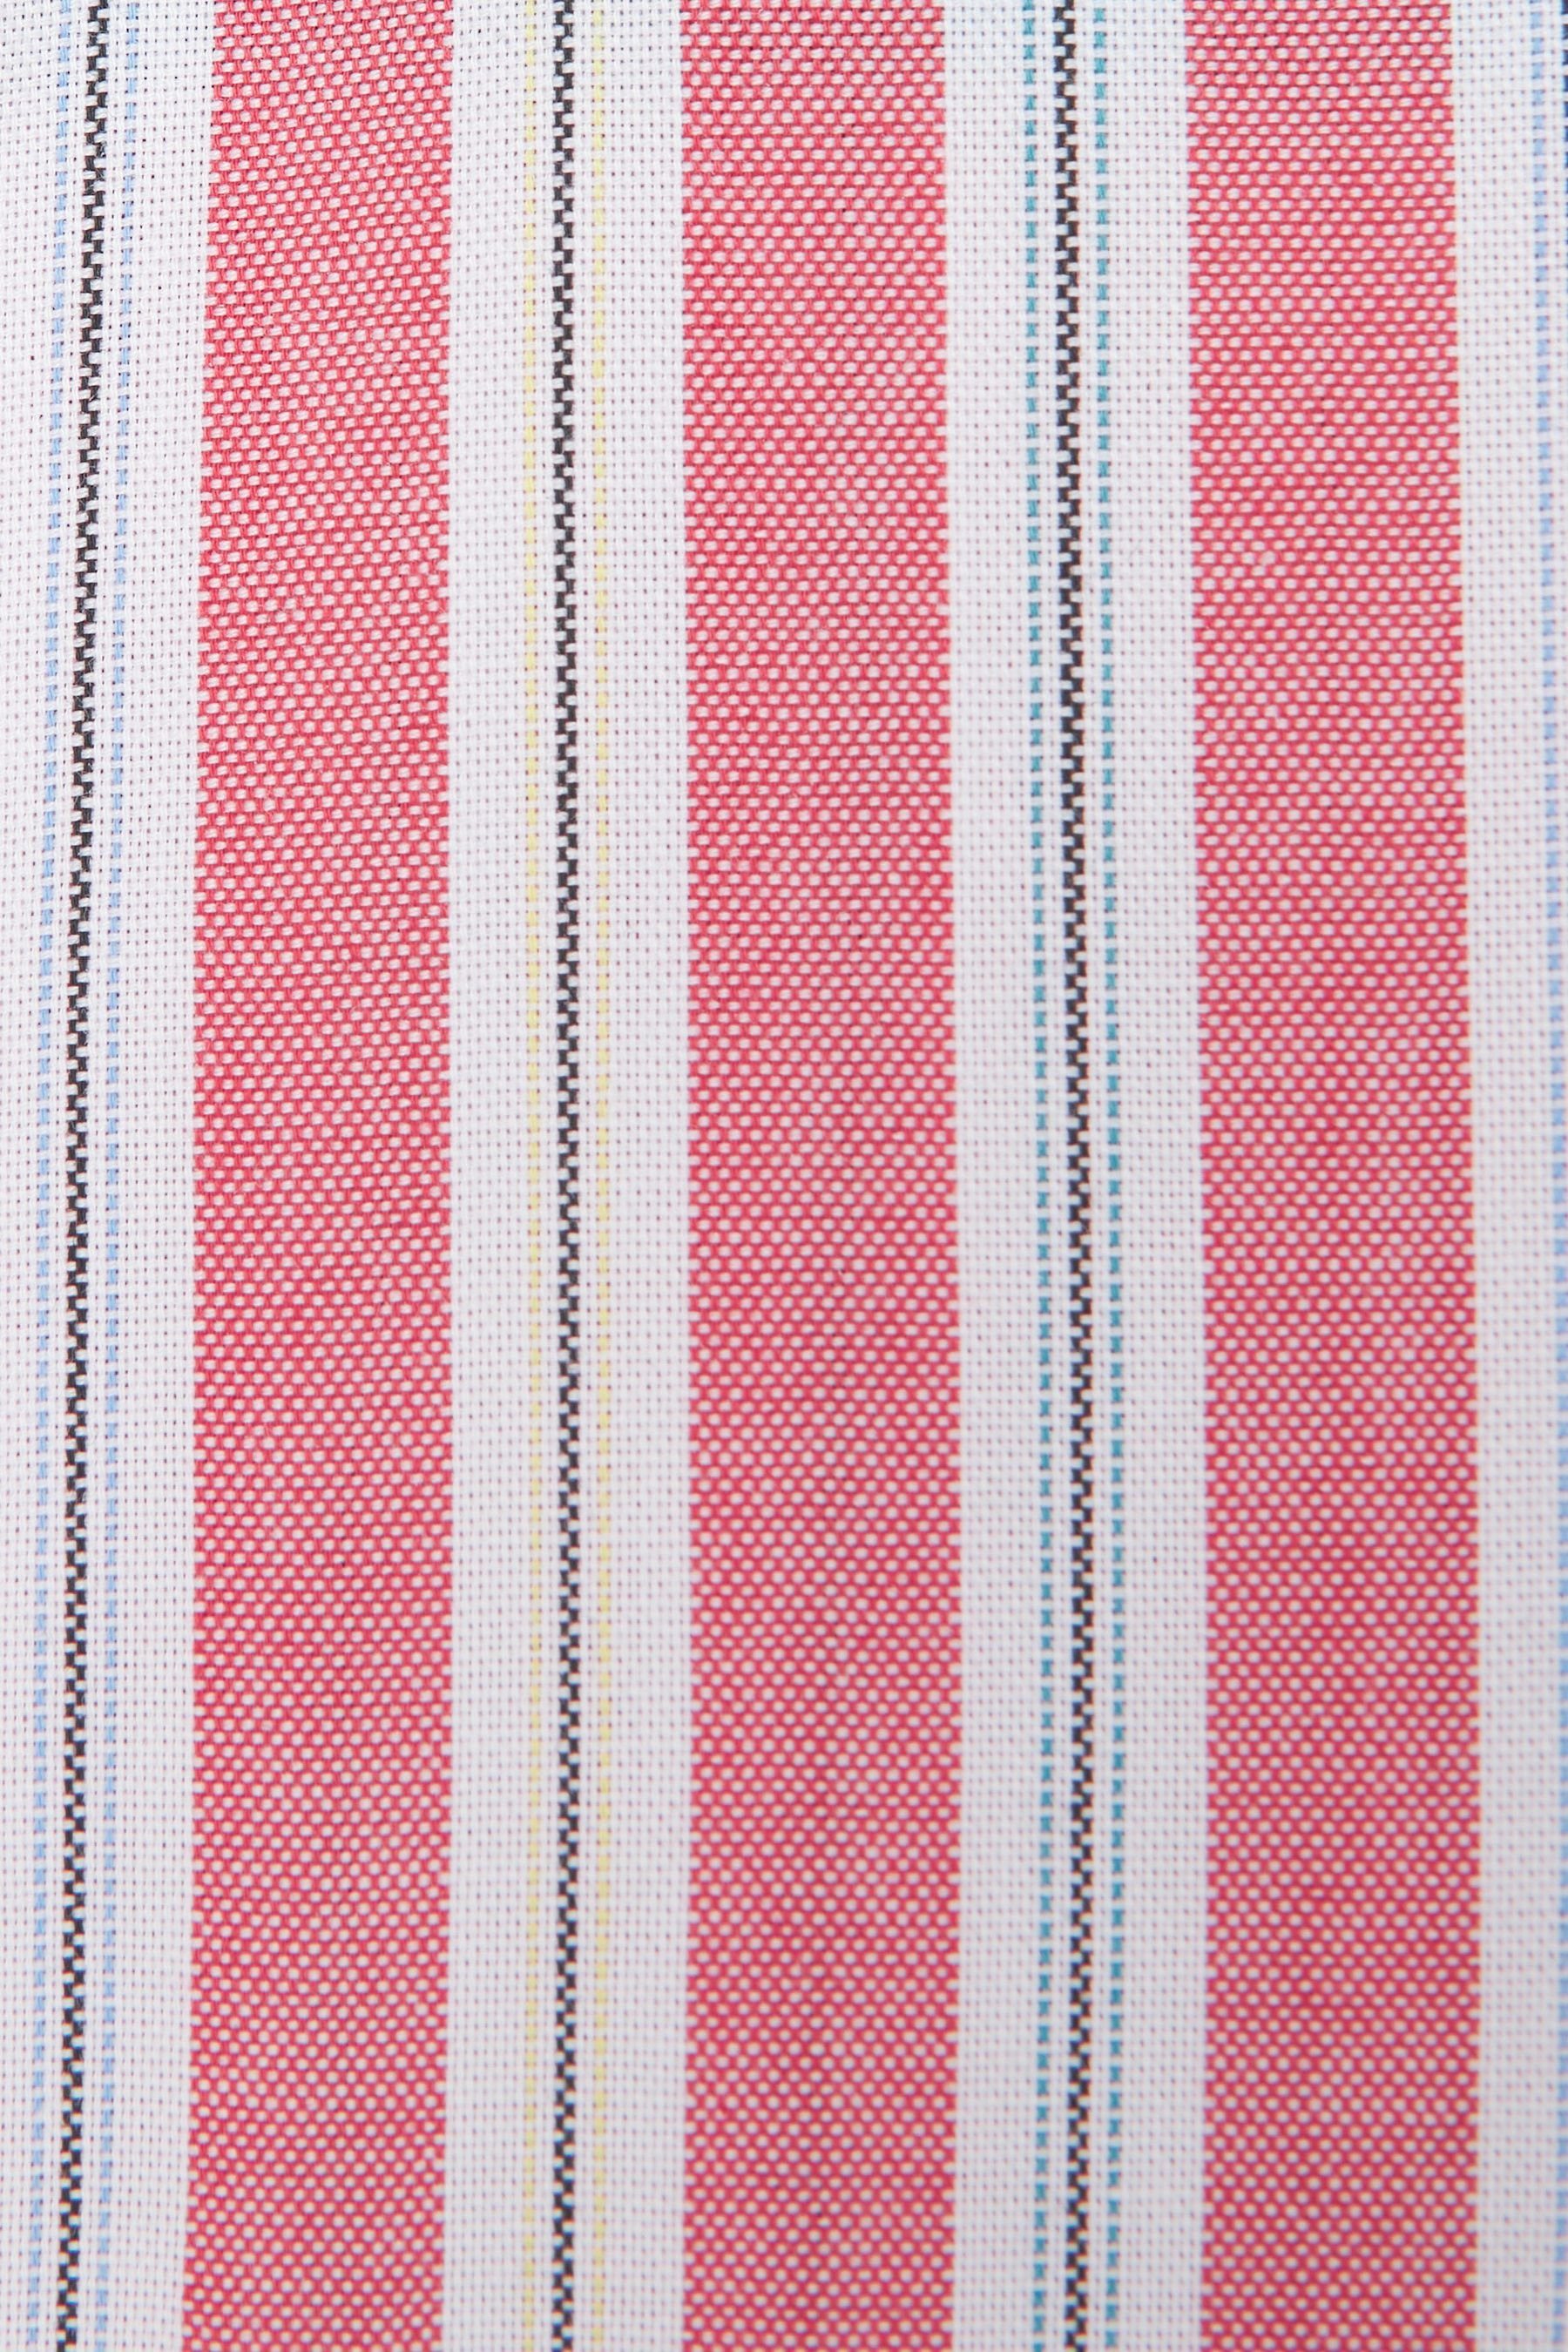 Pink Stripe Next Kurzarmhemd (1-tlg)